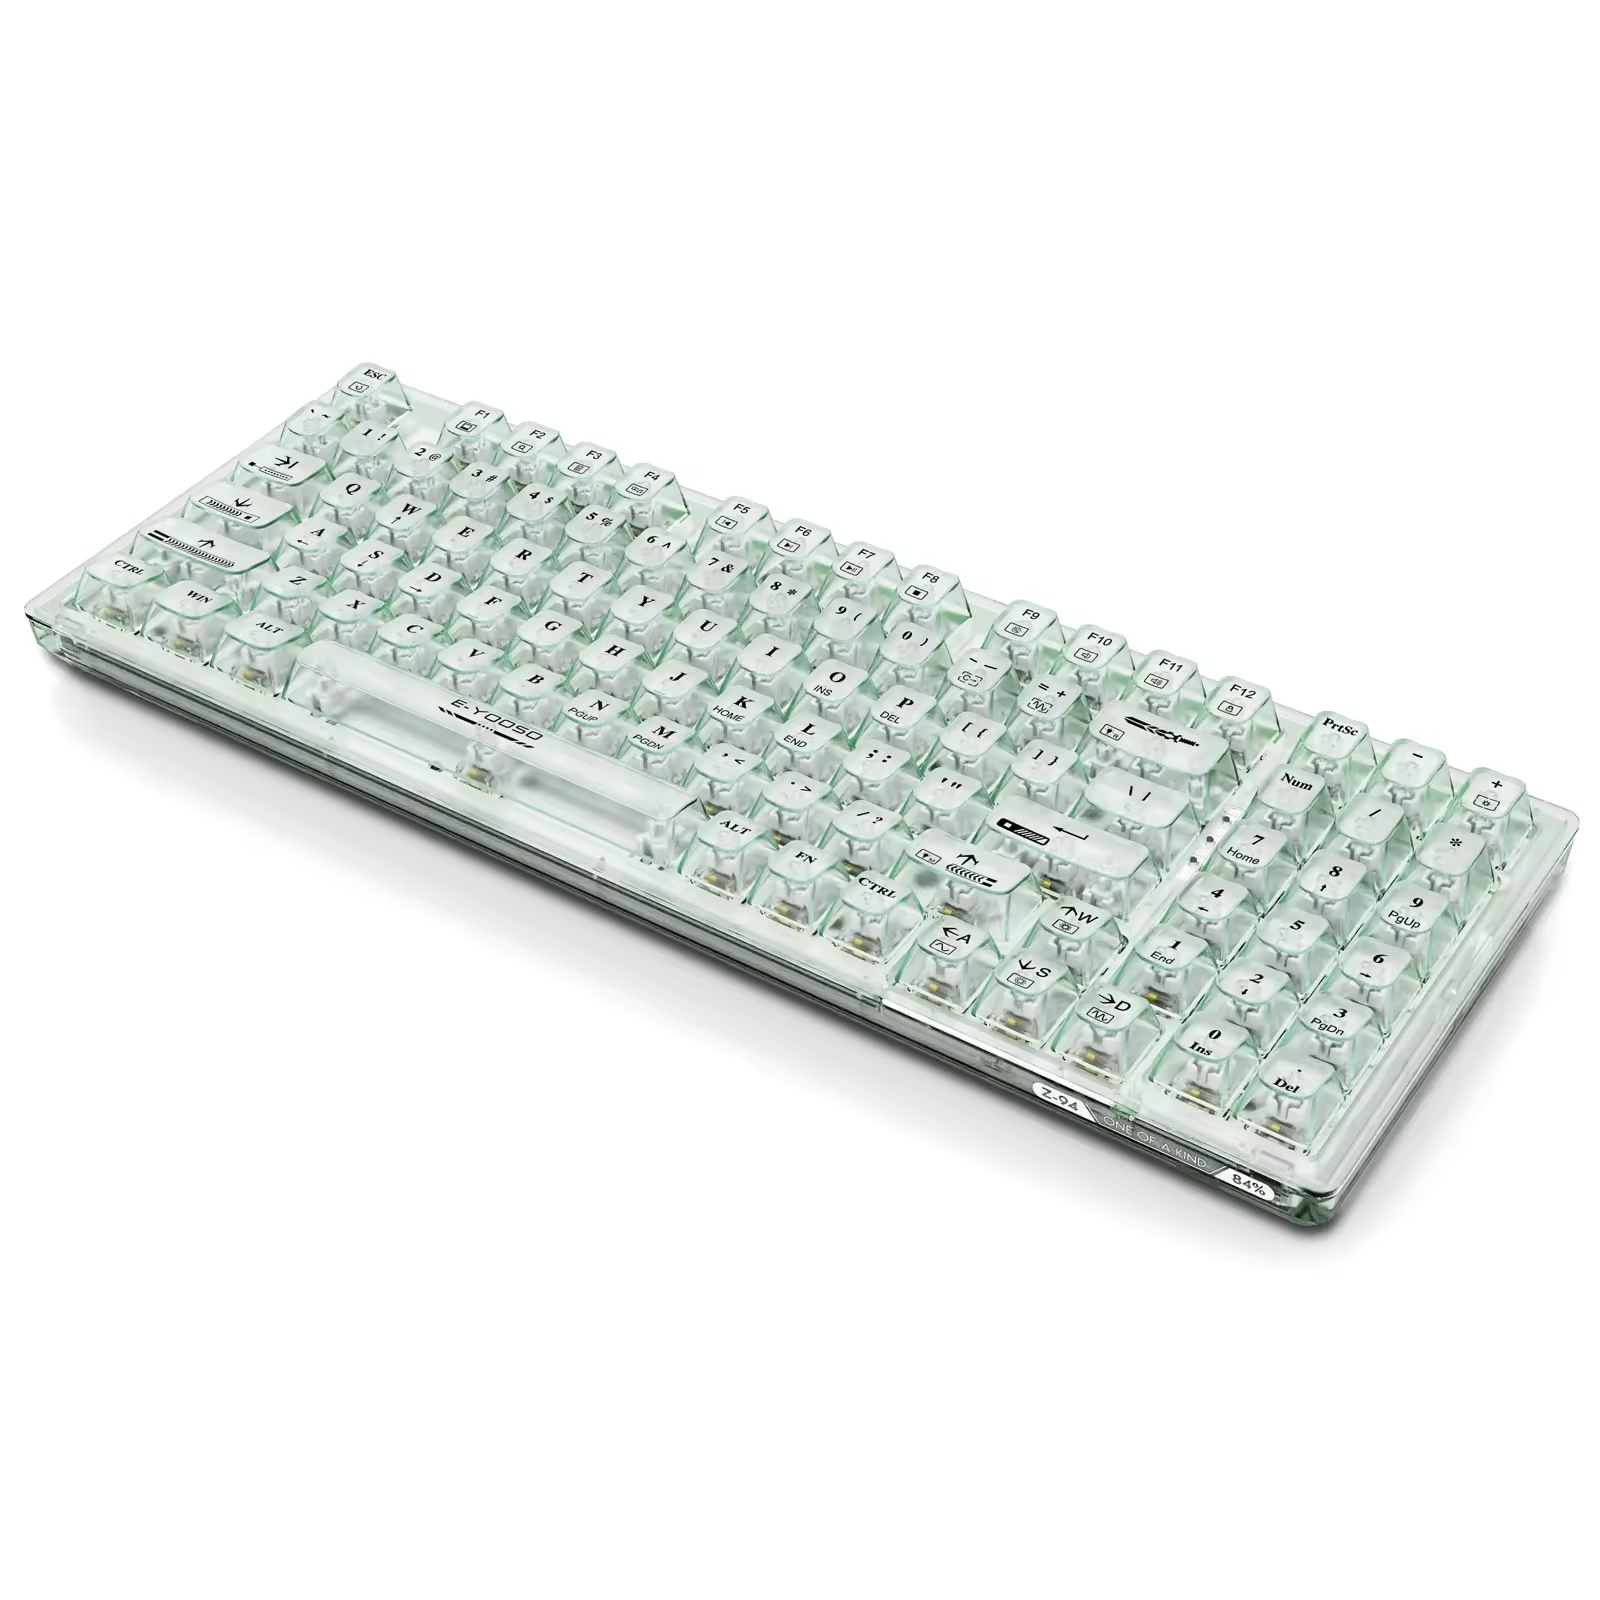 EYOOSO Z94 95% 94 key computer keyboard transparent purpal for women pc led pbt lucency transparent gaming mechanical keyboard